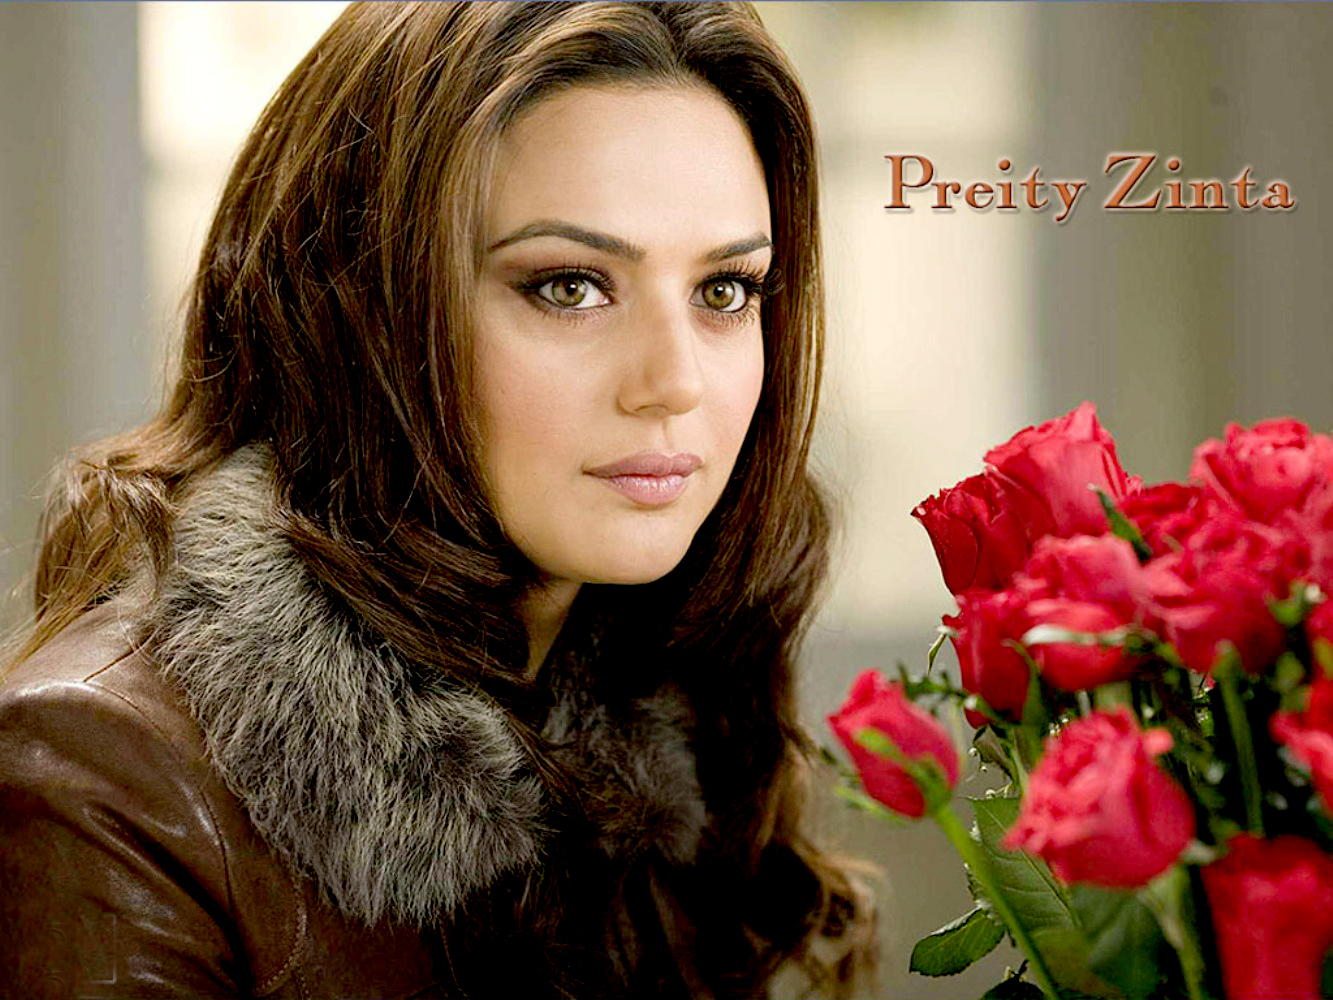 Preity Zinta HD wallpapers, Desktop wallpaper - most viewed